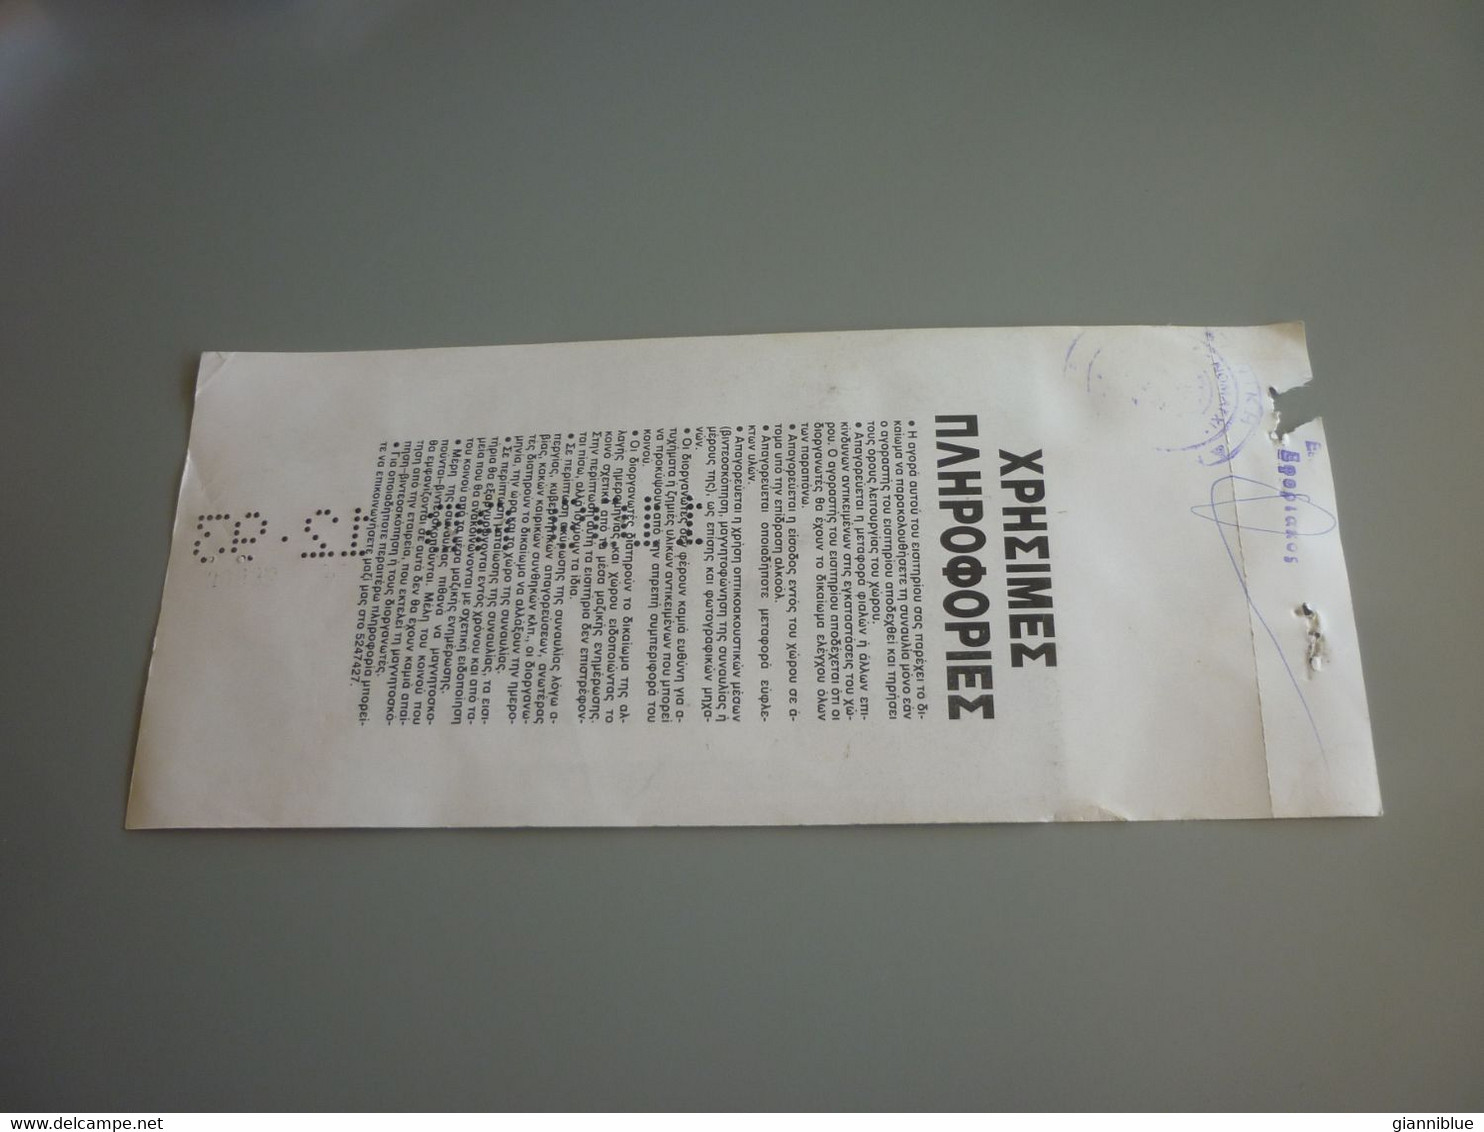 Vasilis Papakonstantinou Rock Music Concert Mint Unused Greece Greek Ticket (Camel Music Skai TV) - Tickets De Concerts